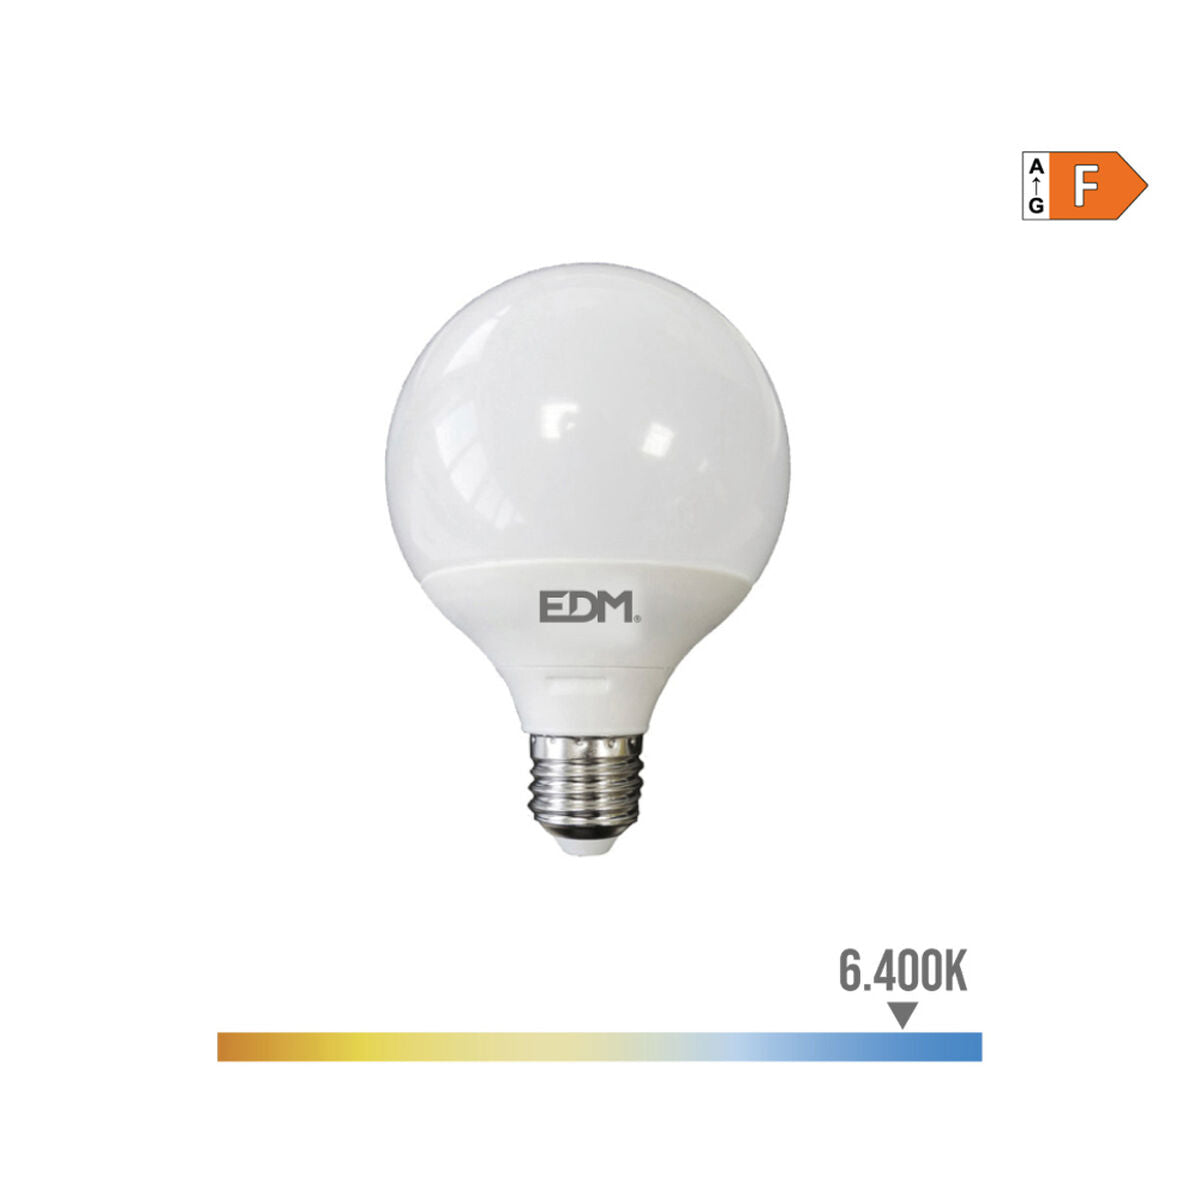 LED lamp EDM F 10 W E27 810 Lm 12 x 9,5 cm (6400 K)